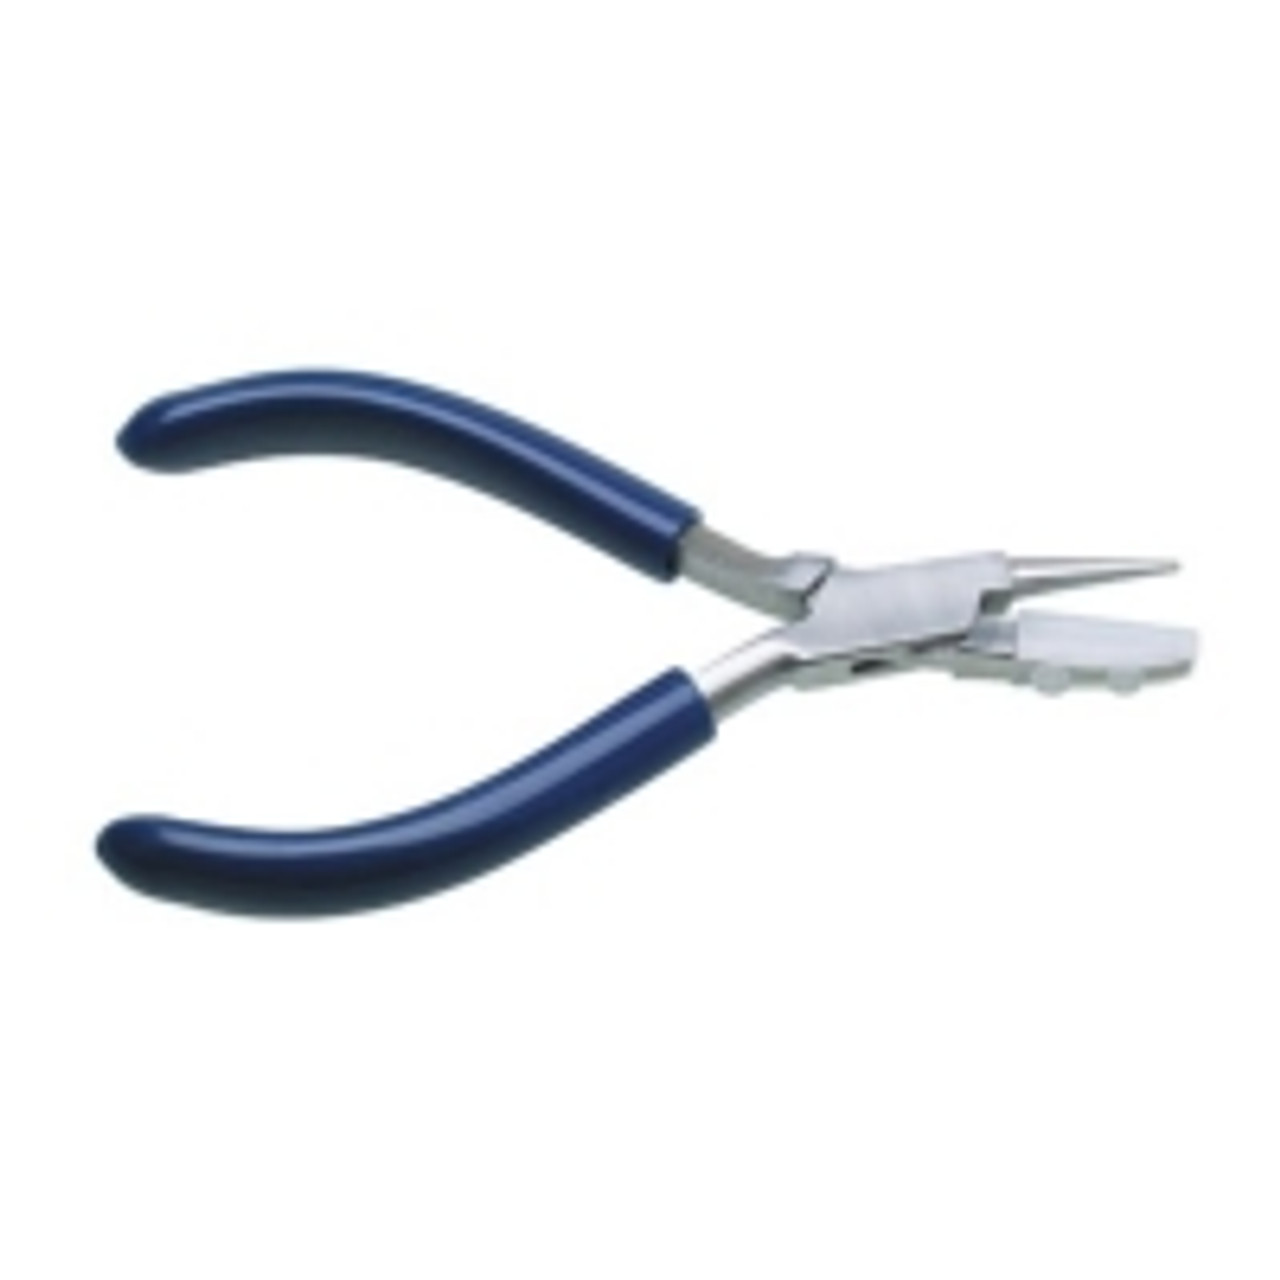 Nylon Jaw Bending Plier 5 1/2 inch Clearance | Esslinger